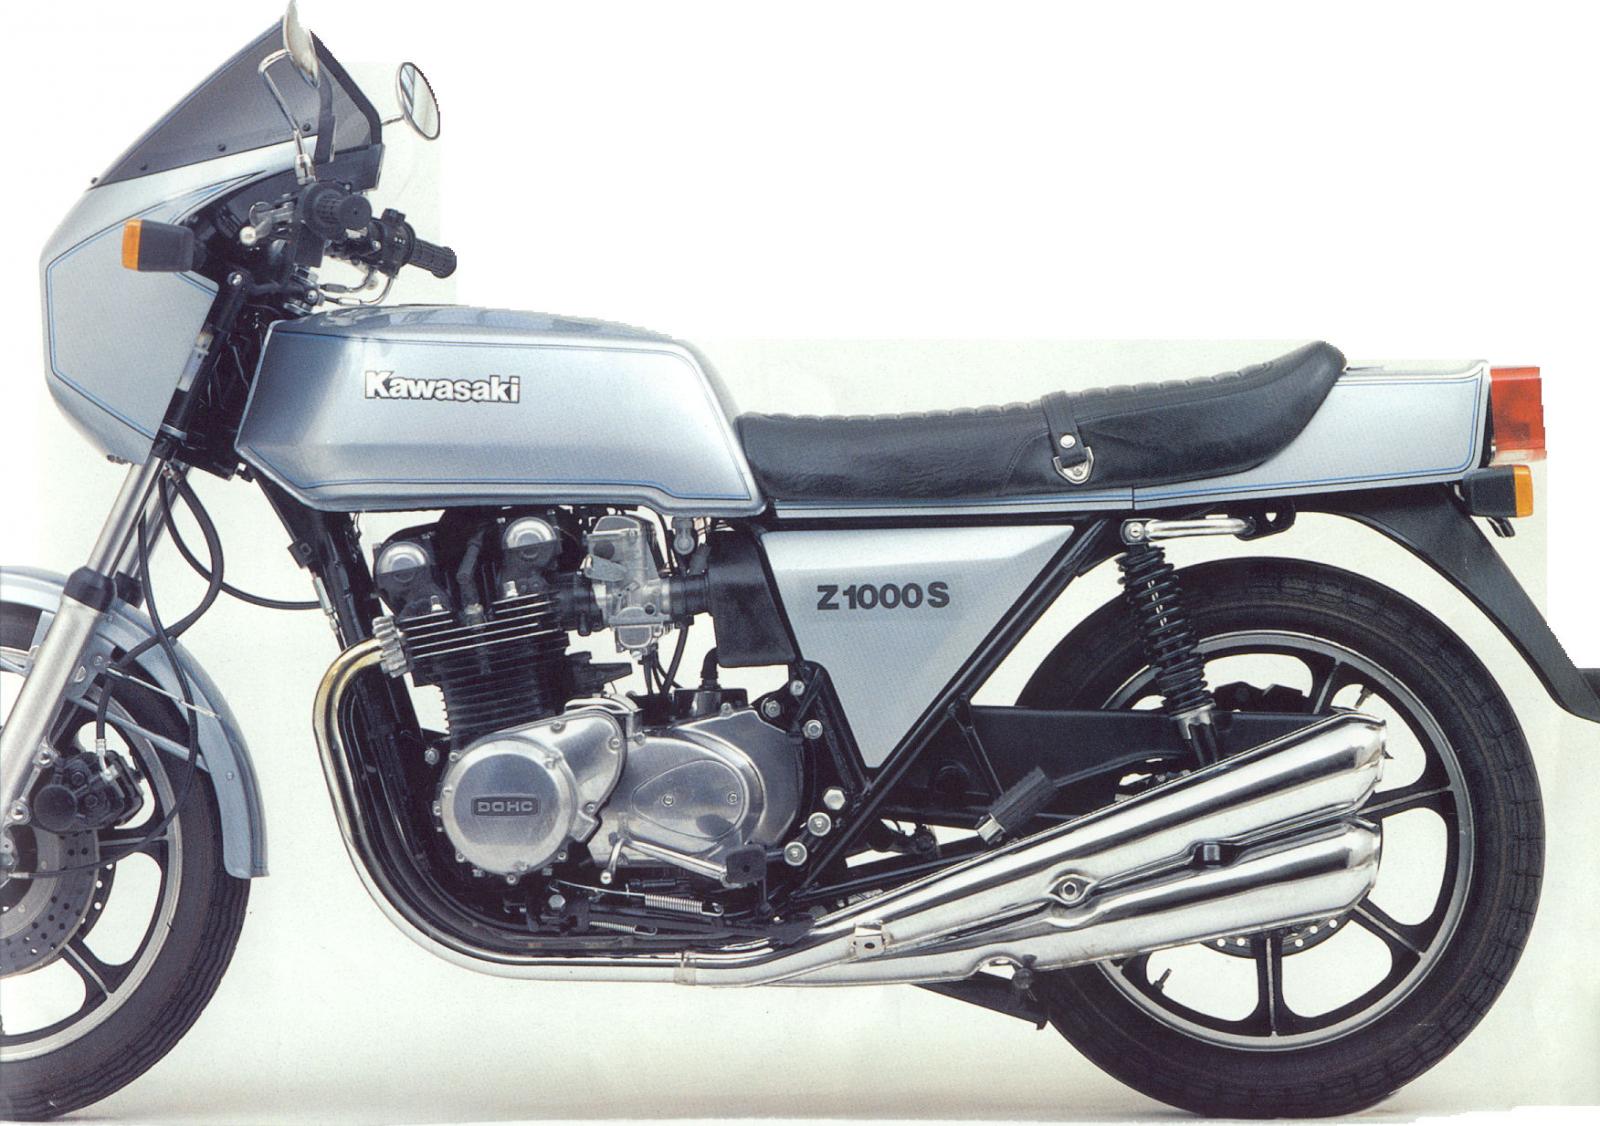 File:1980 Kawasaki Z-1000 H1 injection picture-004.JPG 